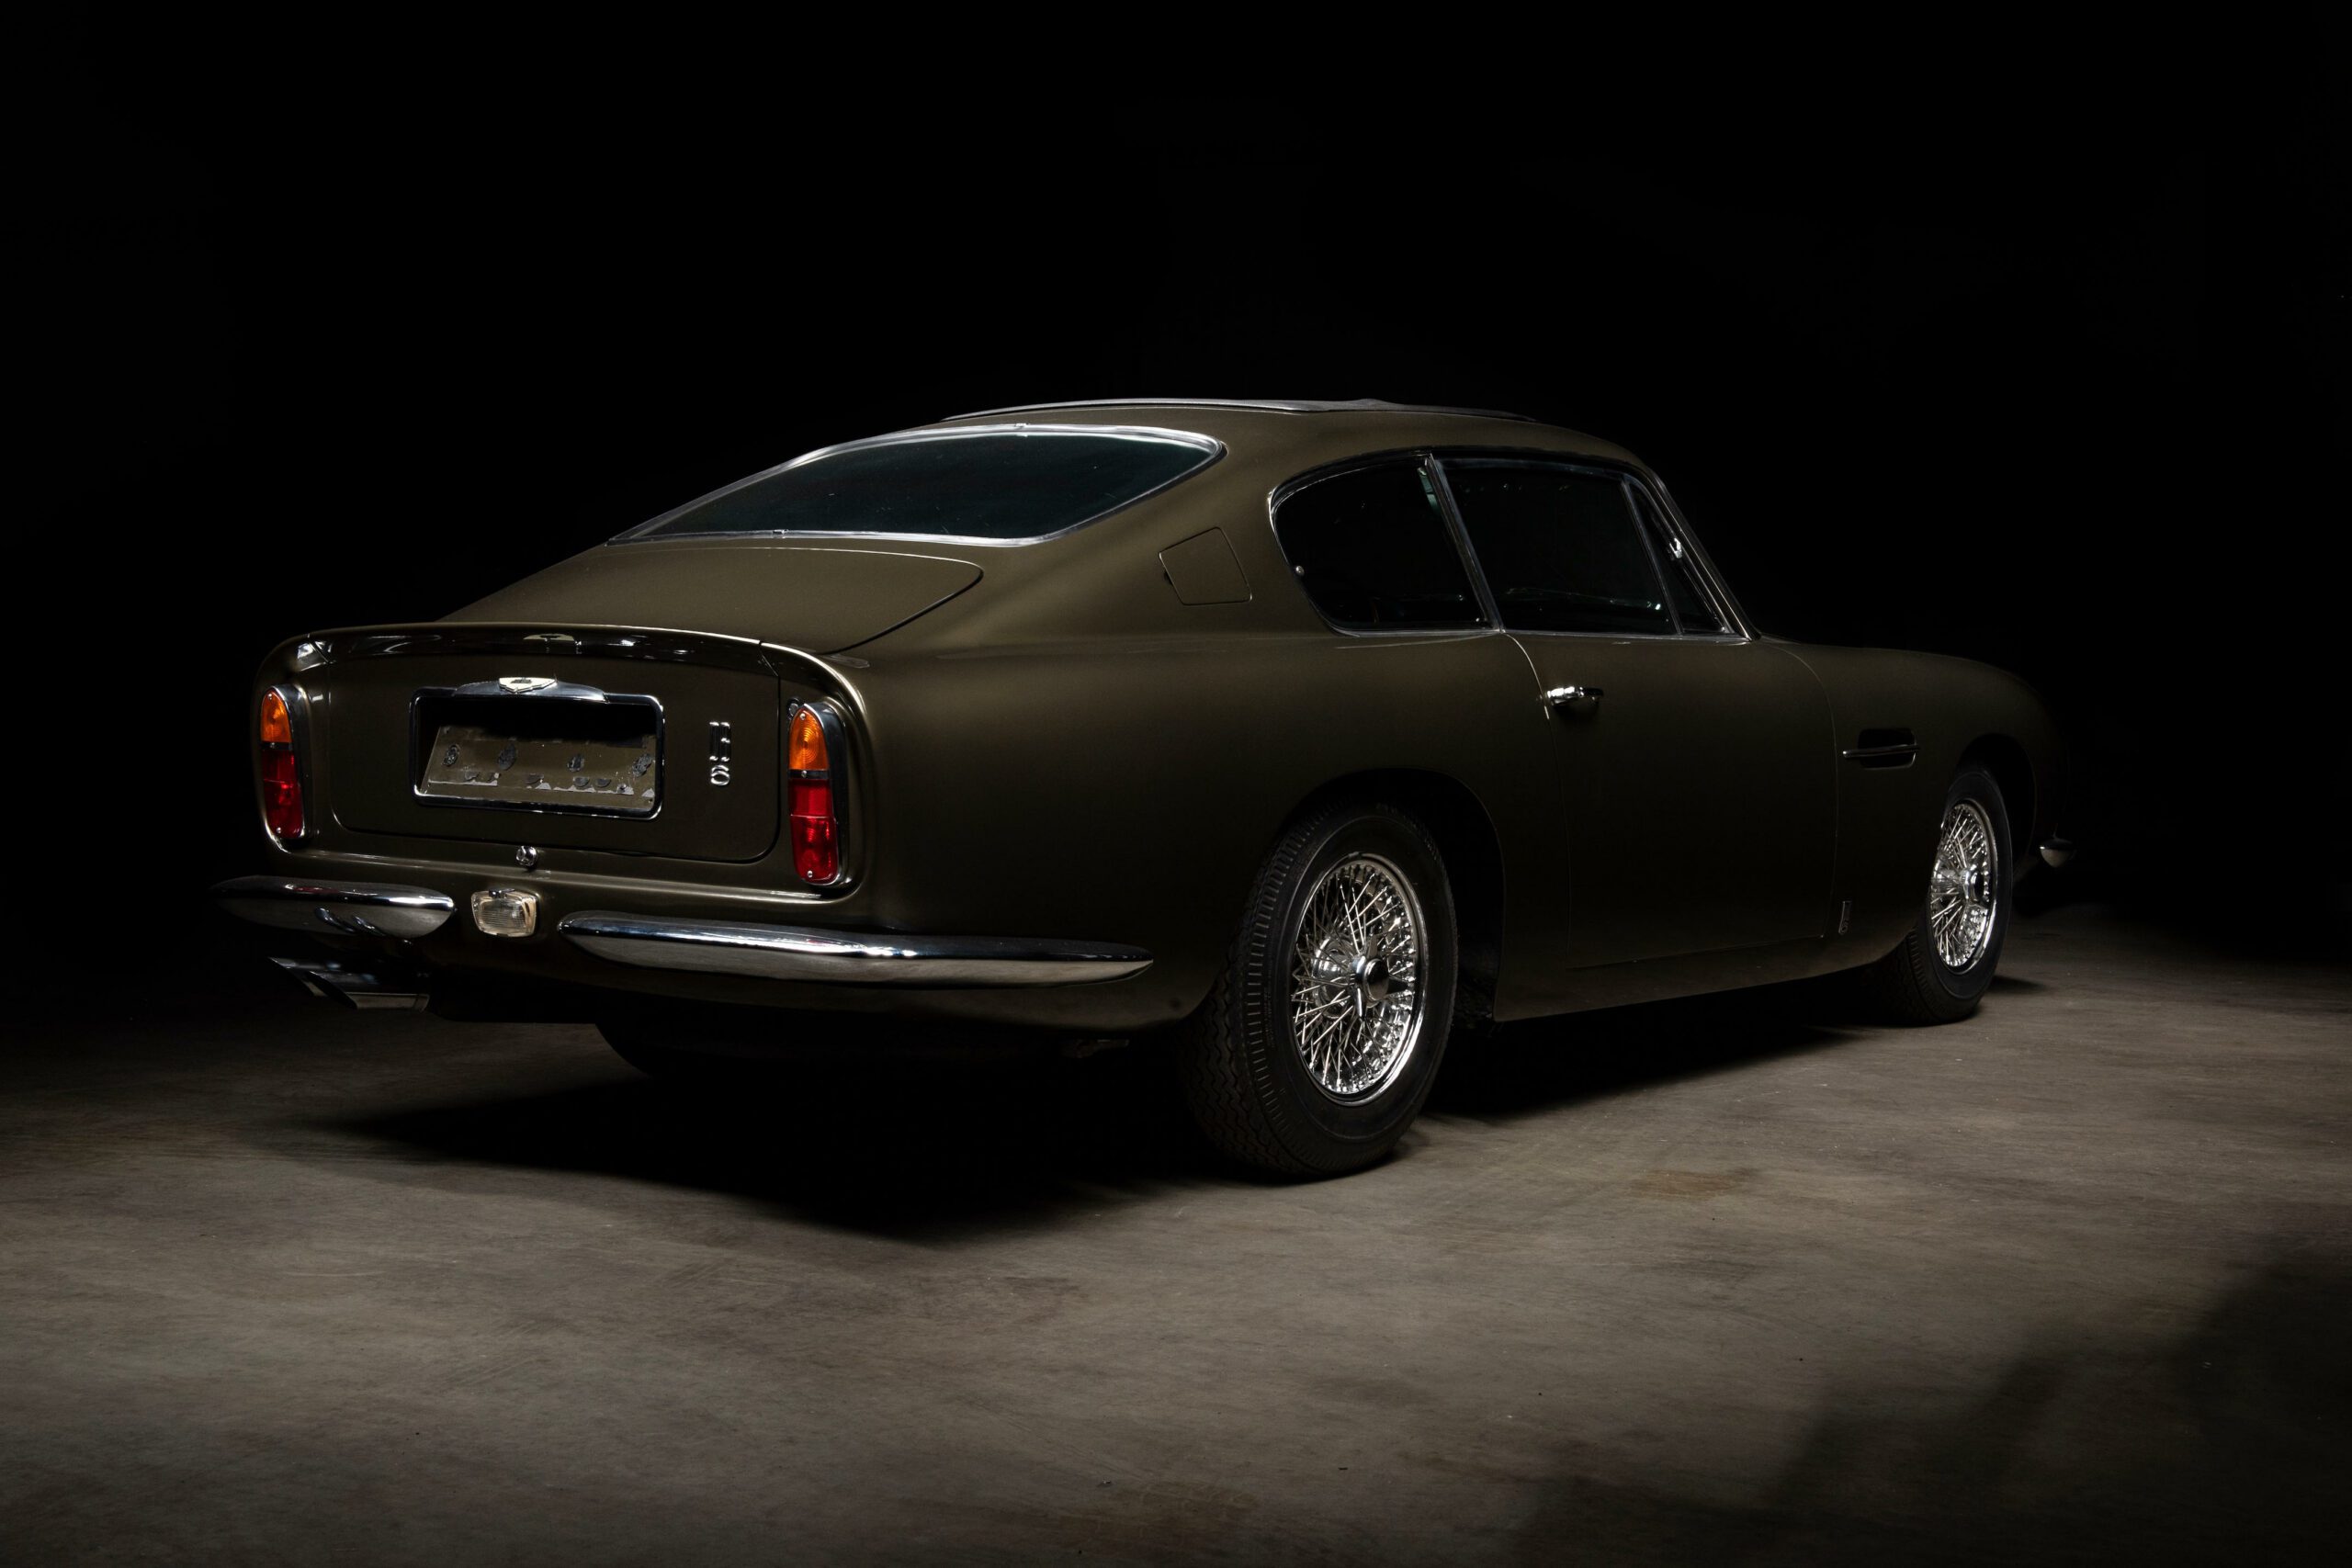 1967 Aston Martin DB6 Saloon